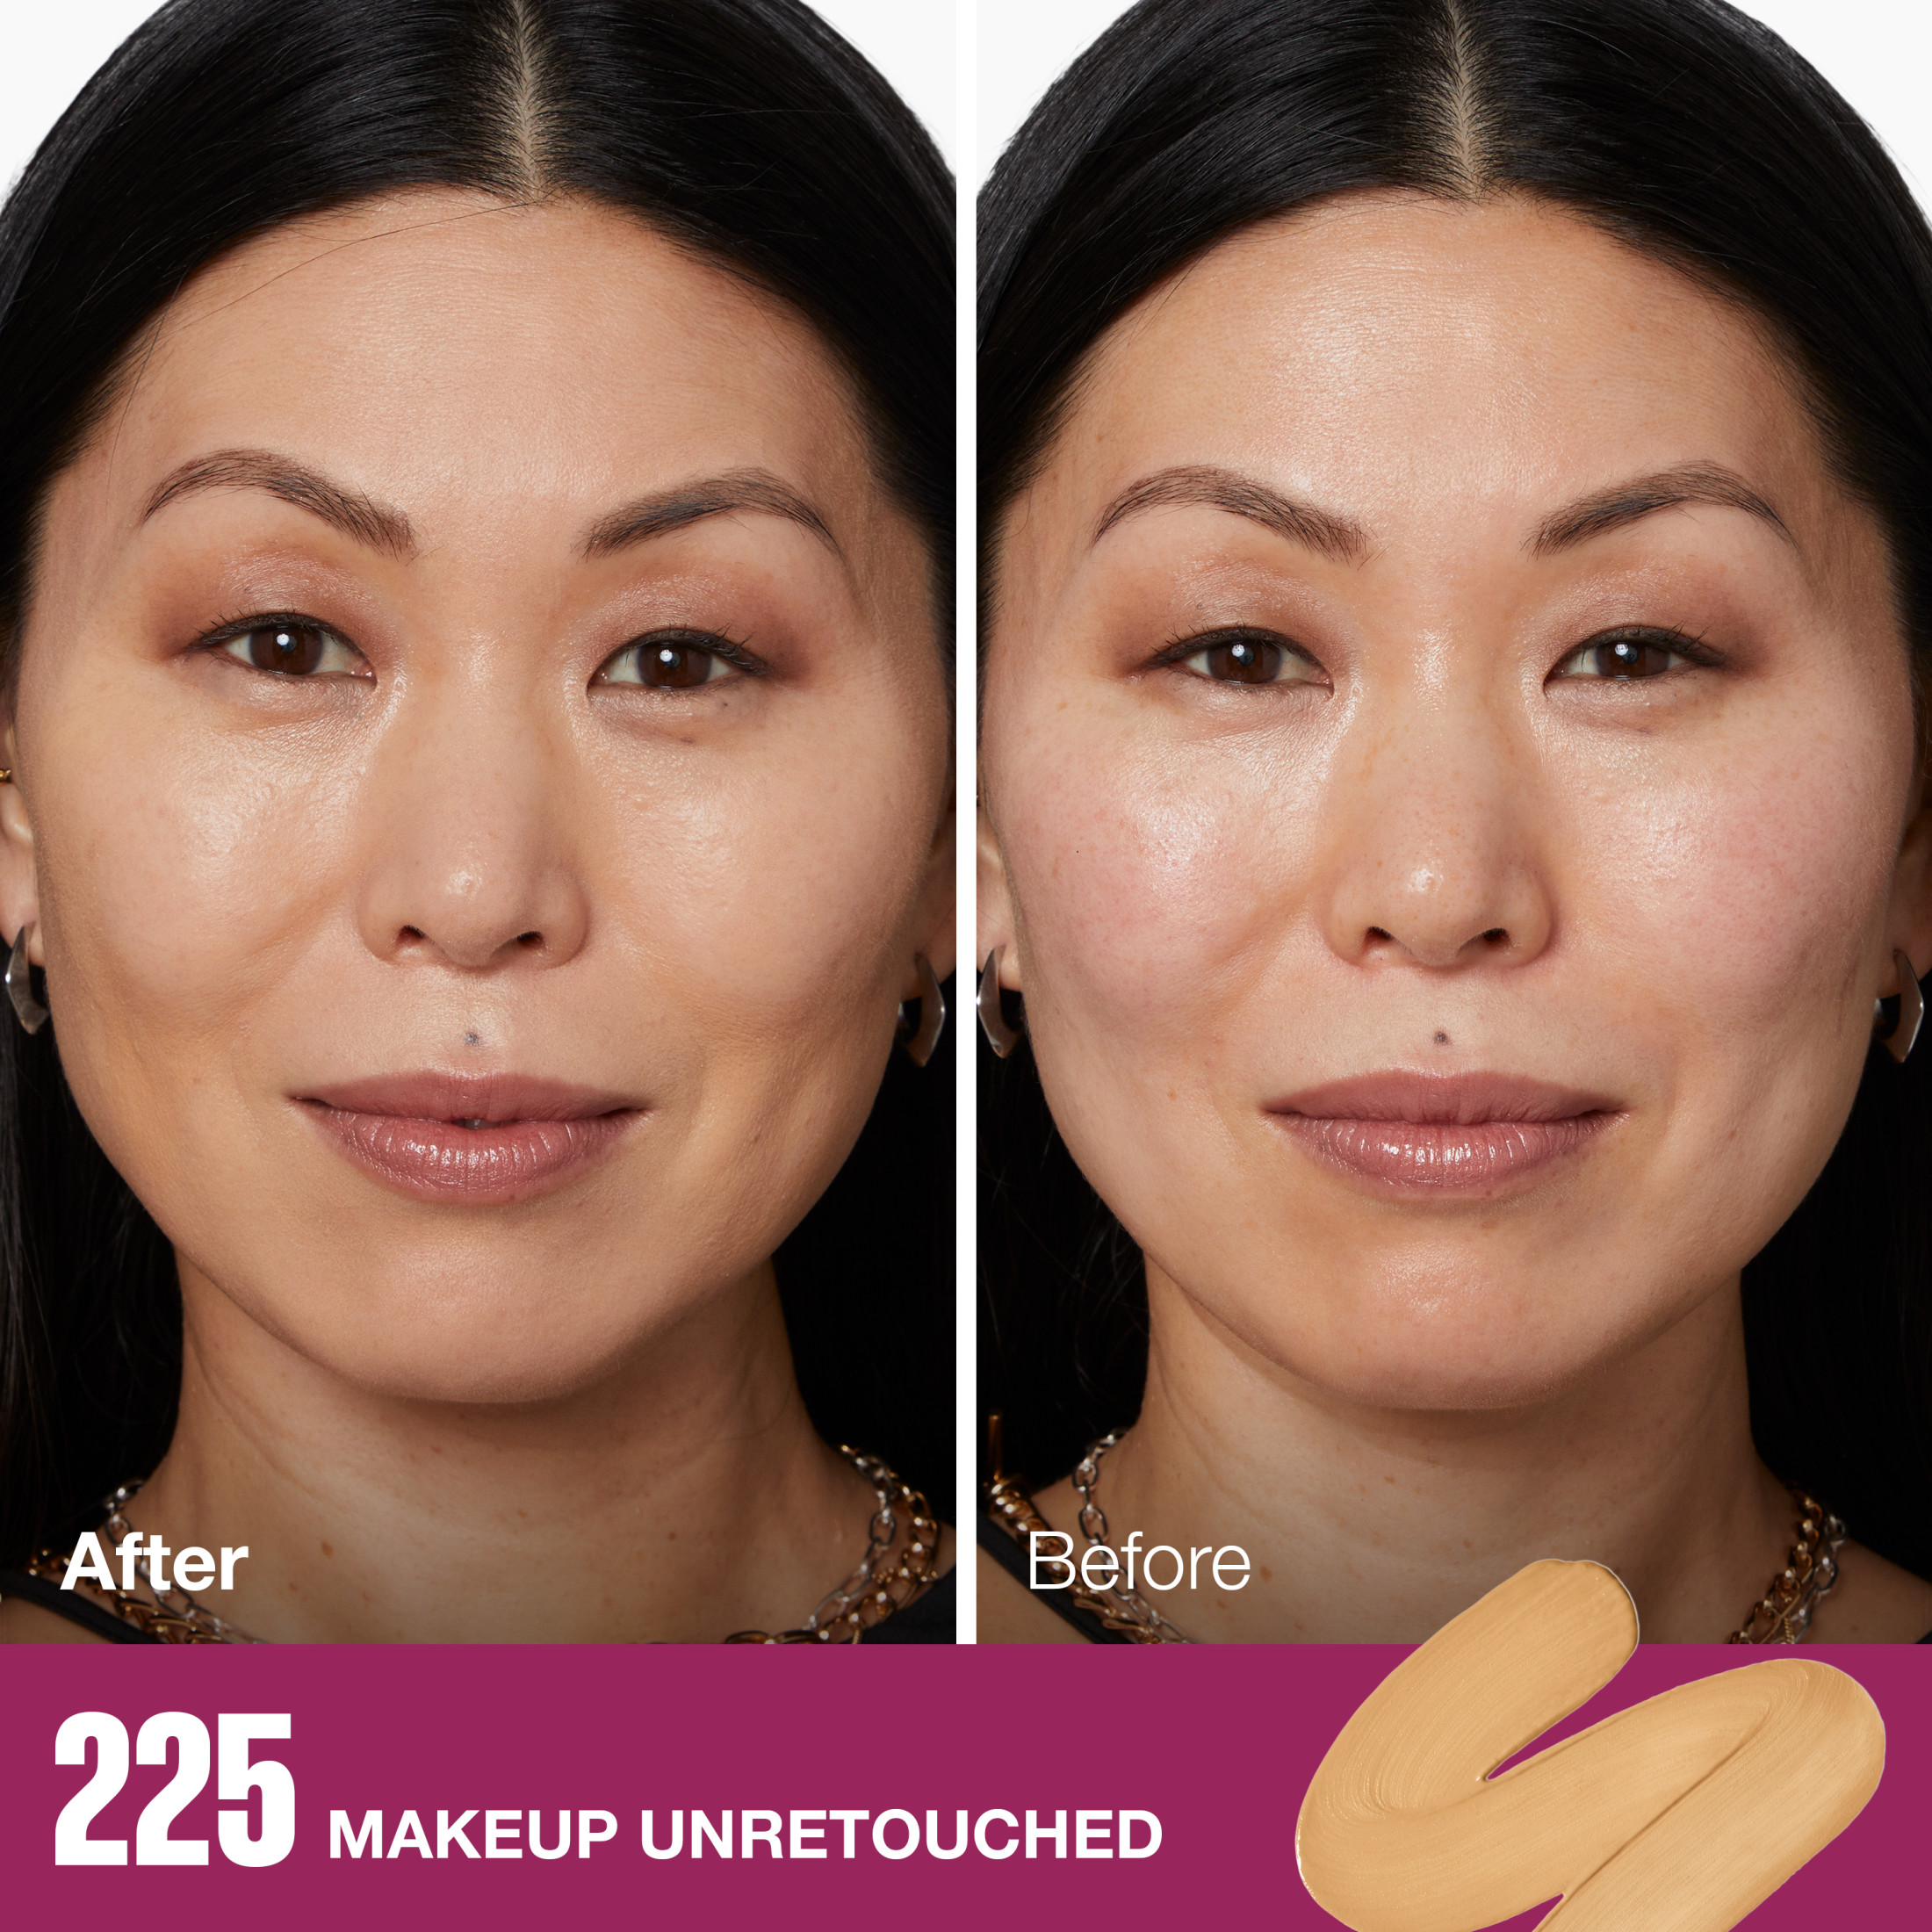 Maybelline Instant Age Rewind Eraser Treatment Foundation Makeup, SPF 20, 225, 0.68 fl oz - image 2 of 7